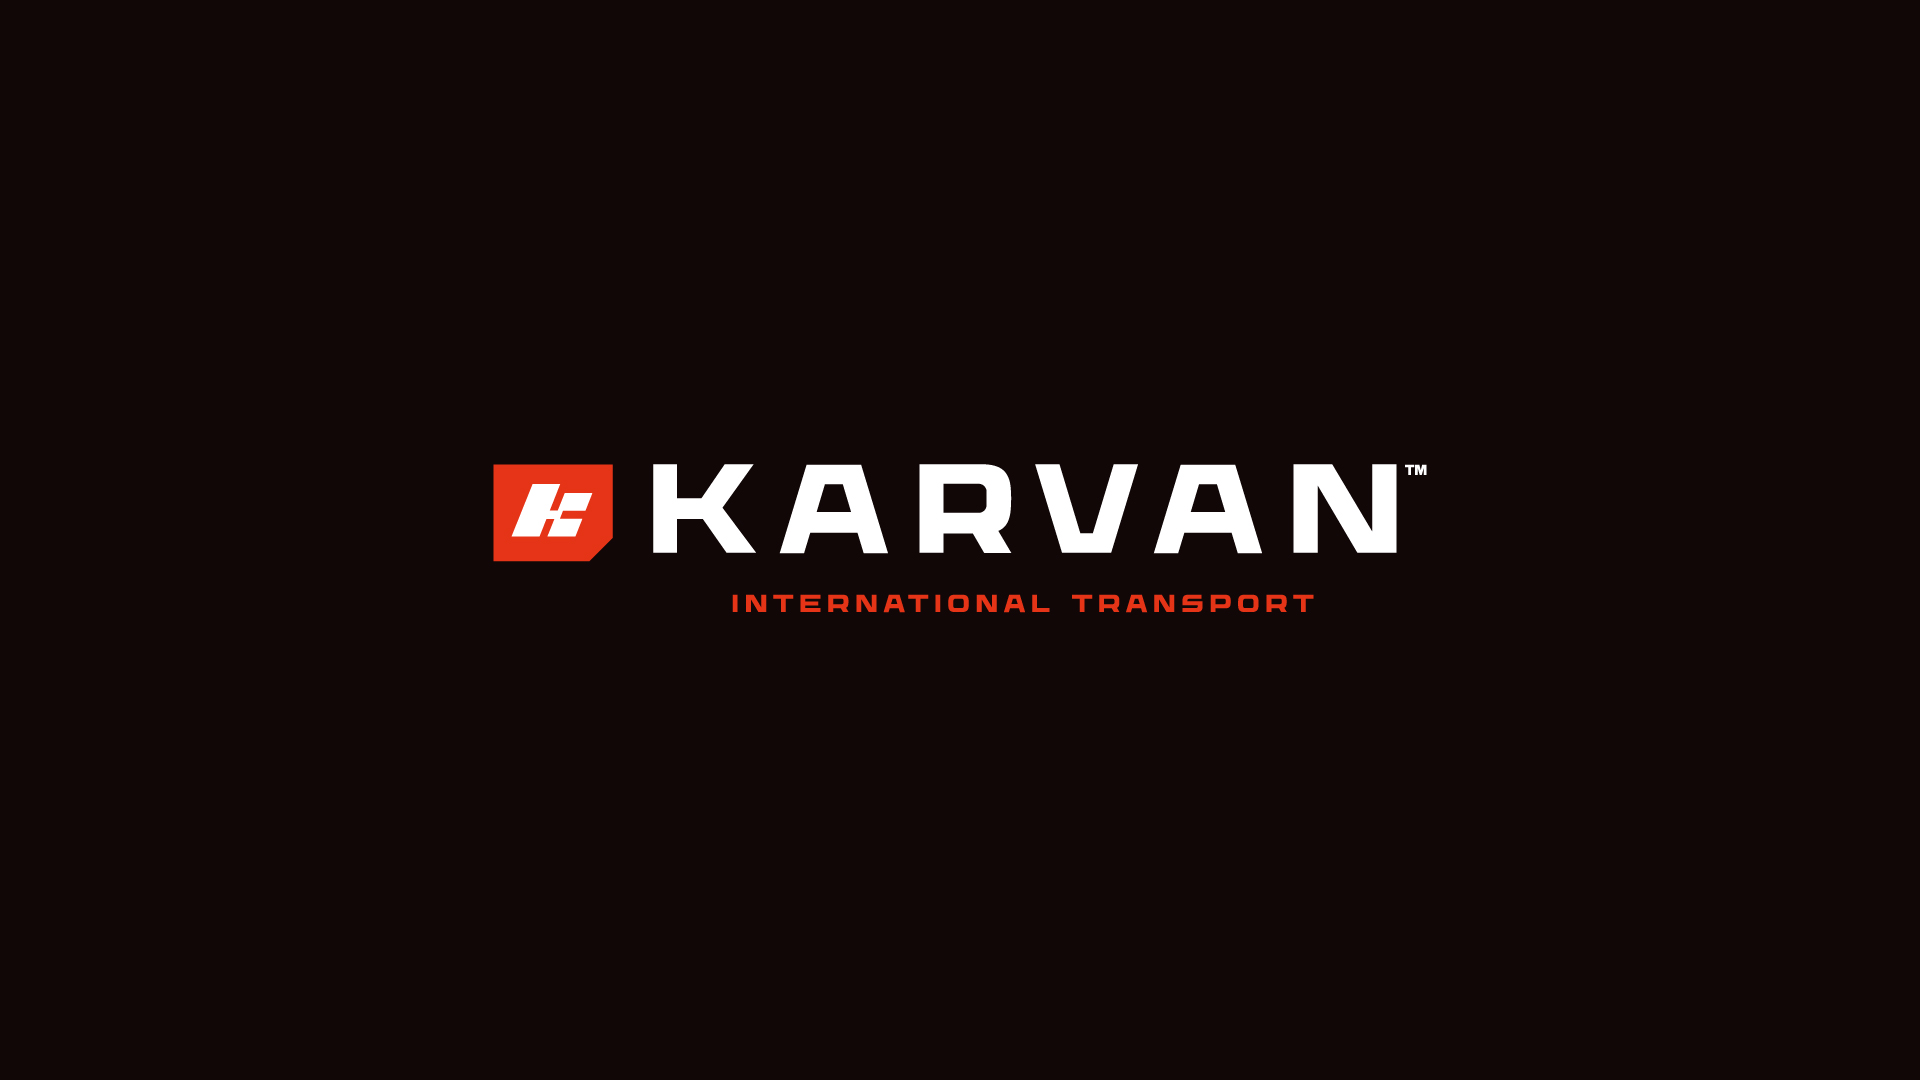 Karvan International Transport Branding